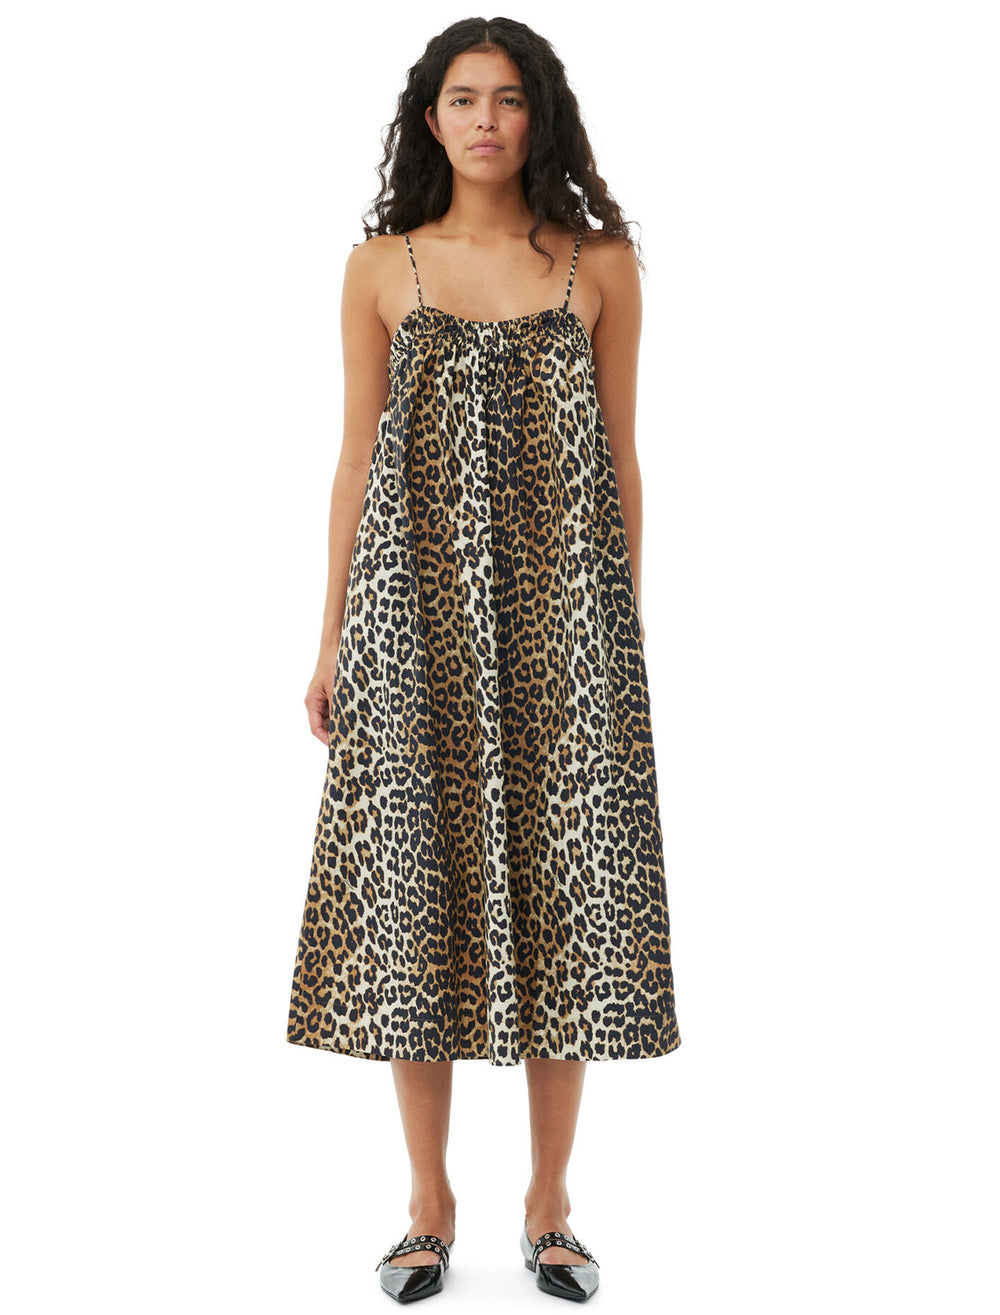 Model wearing GANNI's printed cotton midi dress in leopard.